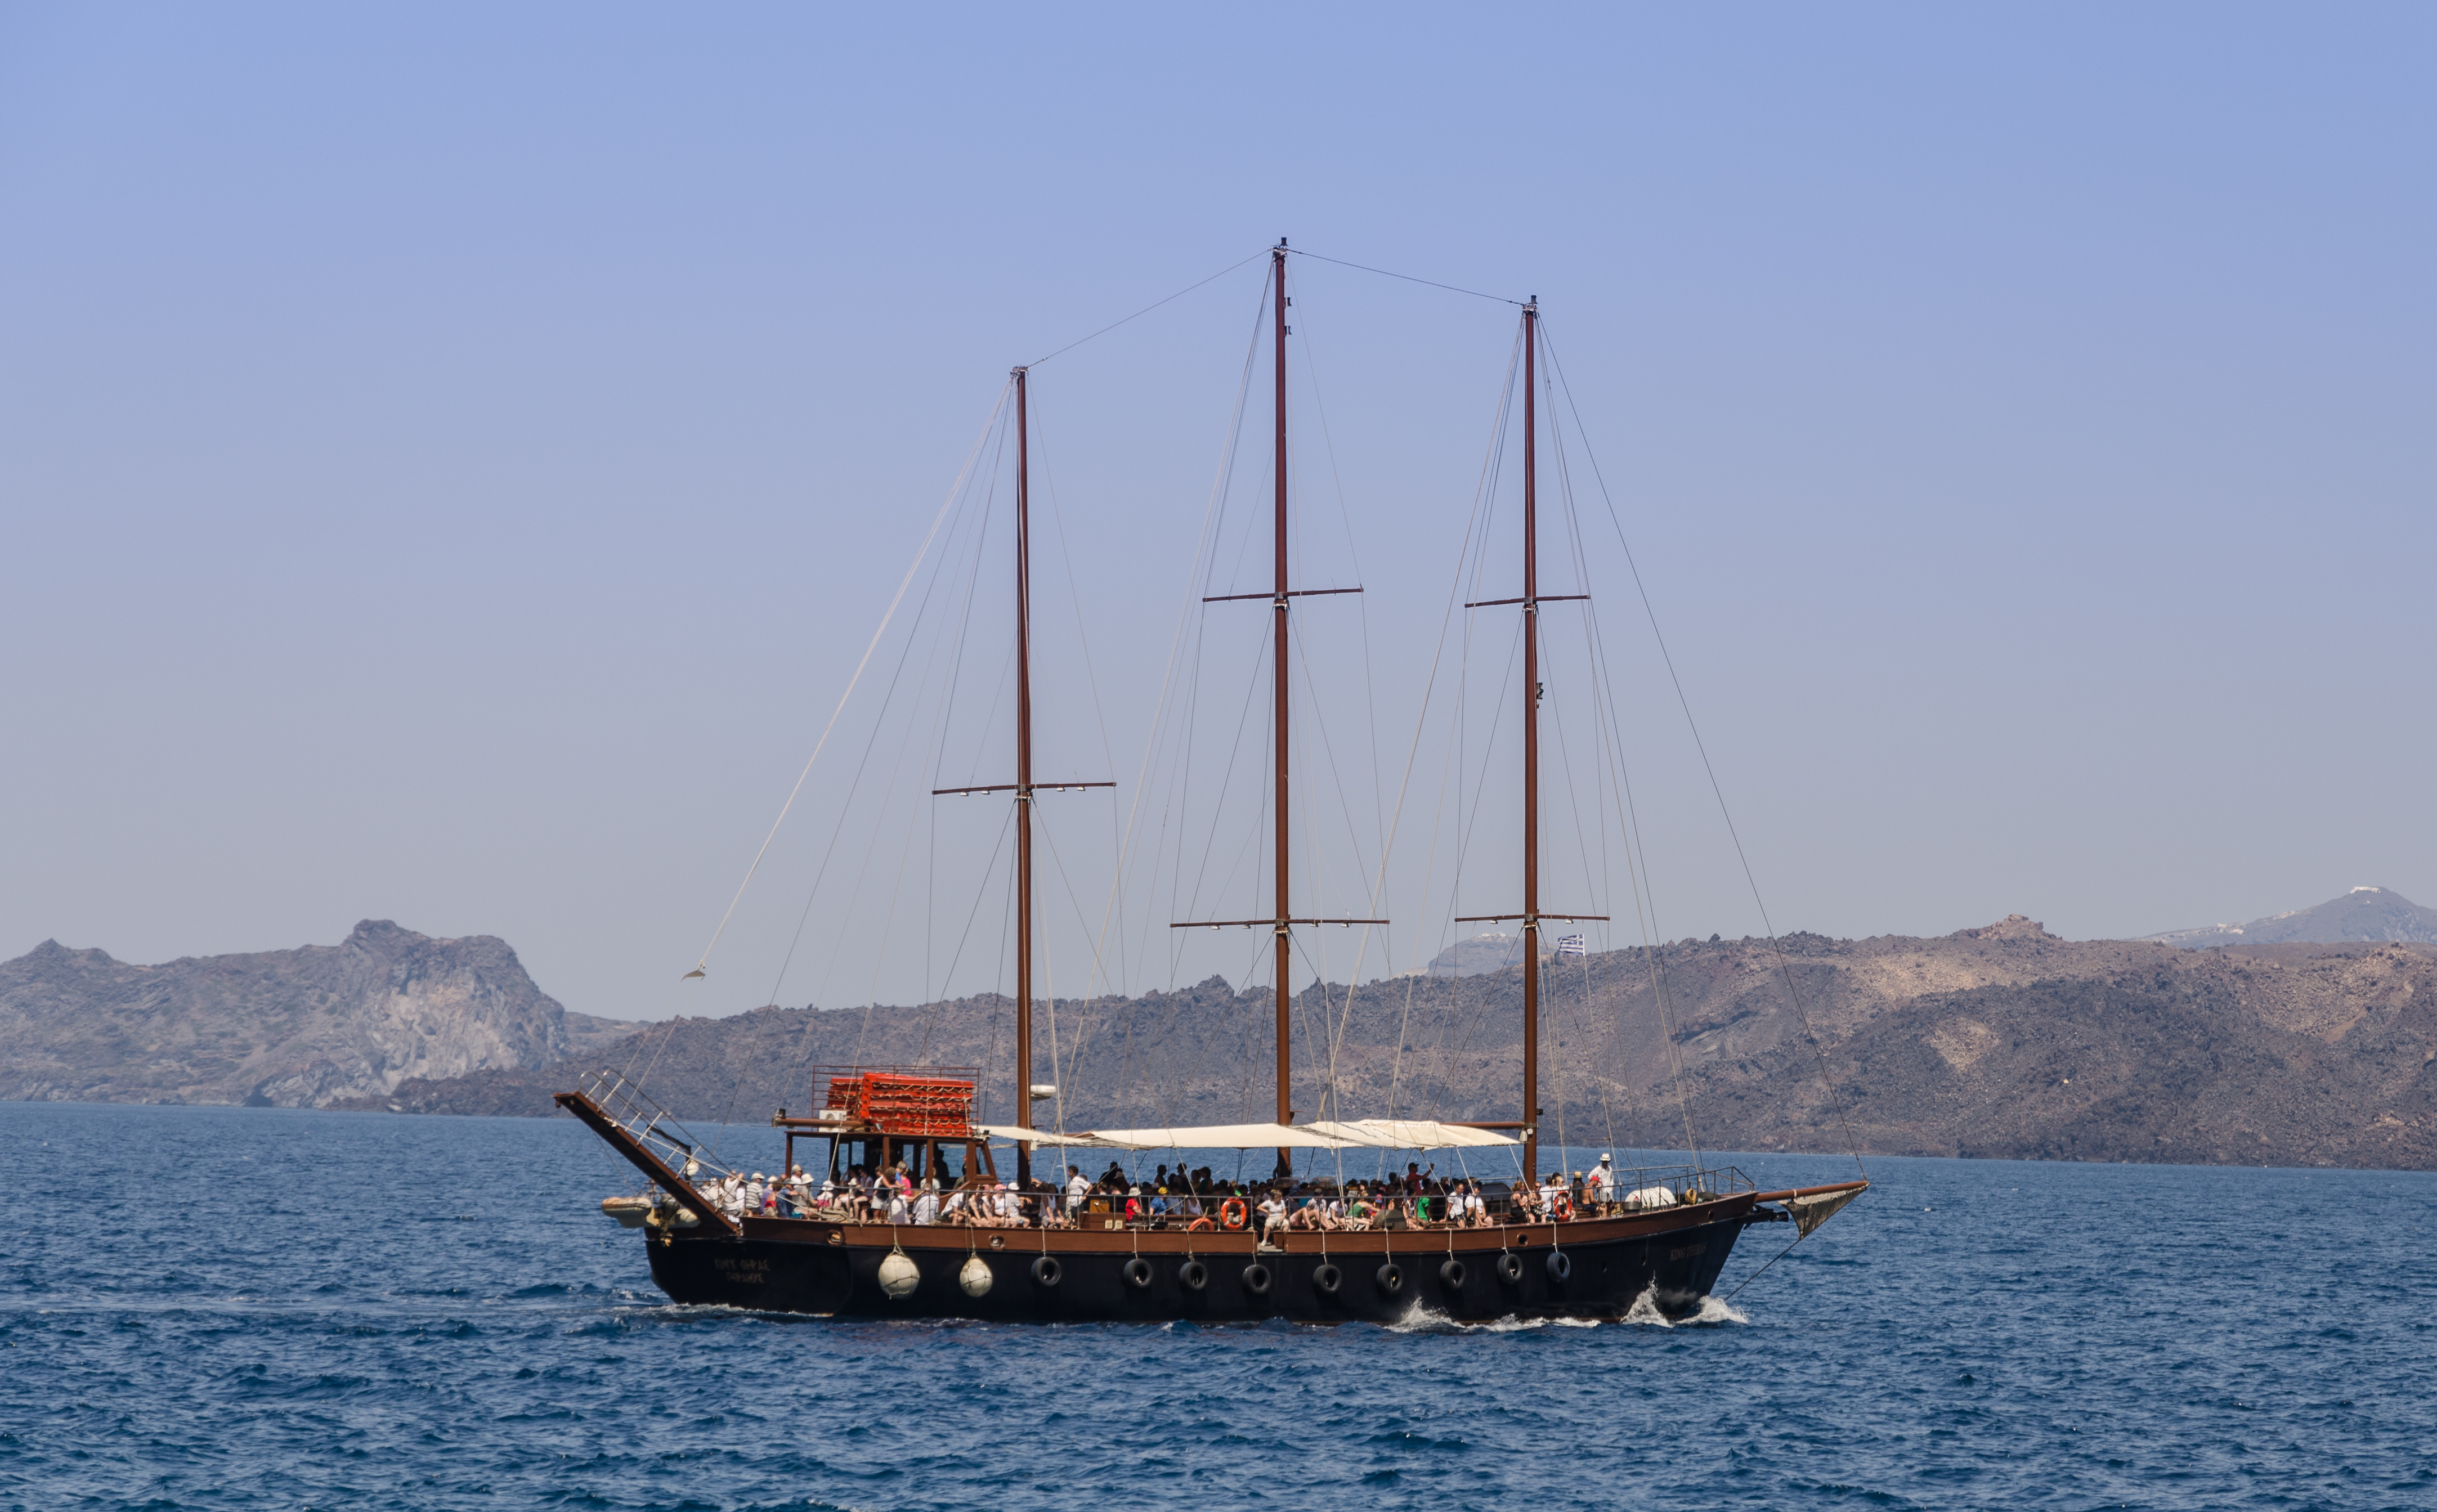 Excursion boat - Athinios port - Santorini - Greece - 01